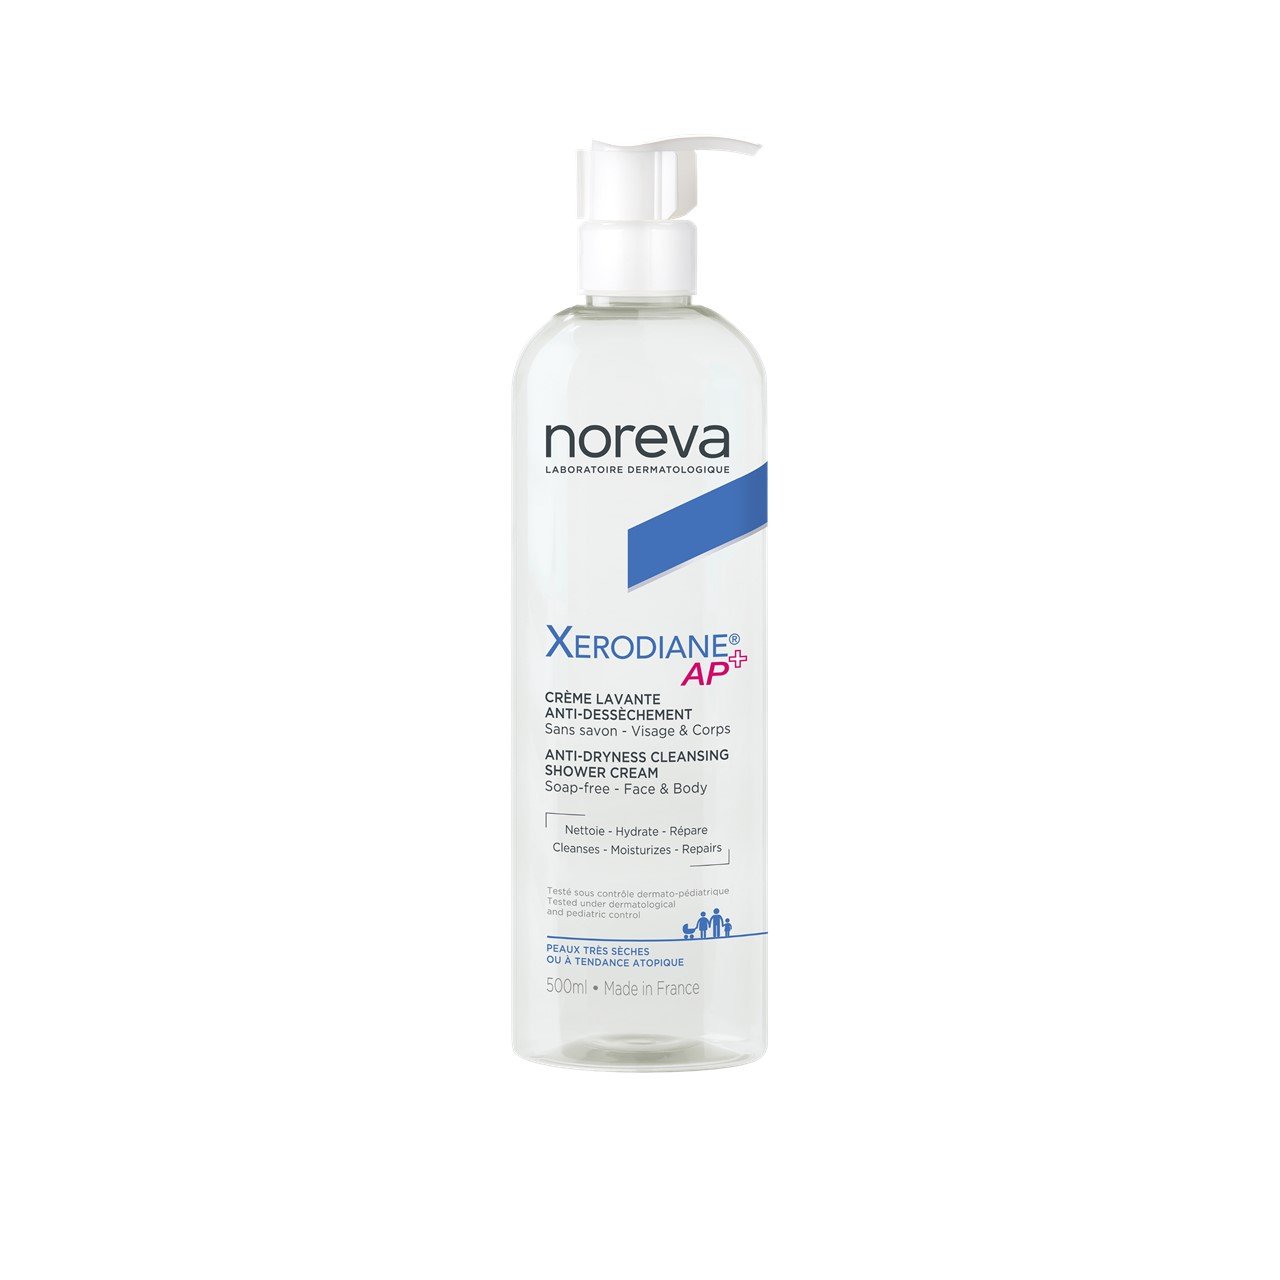 Noreva Xerodiane AP+ Anti-Dryness Cleansing Shower Cream 500ml